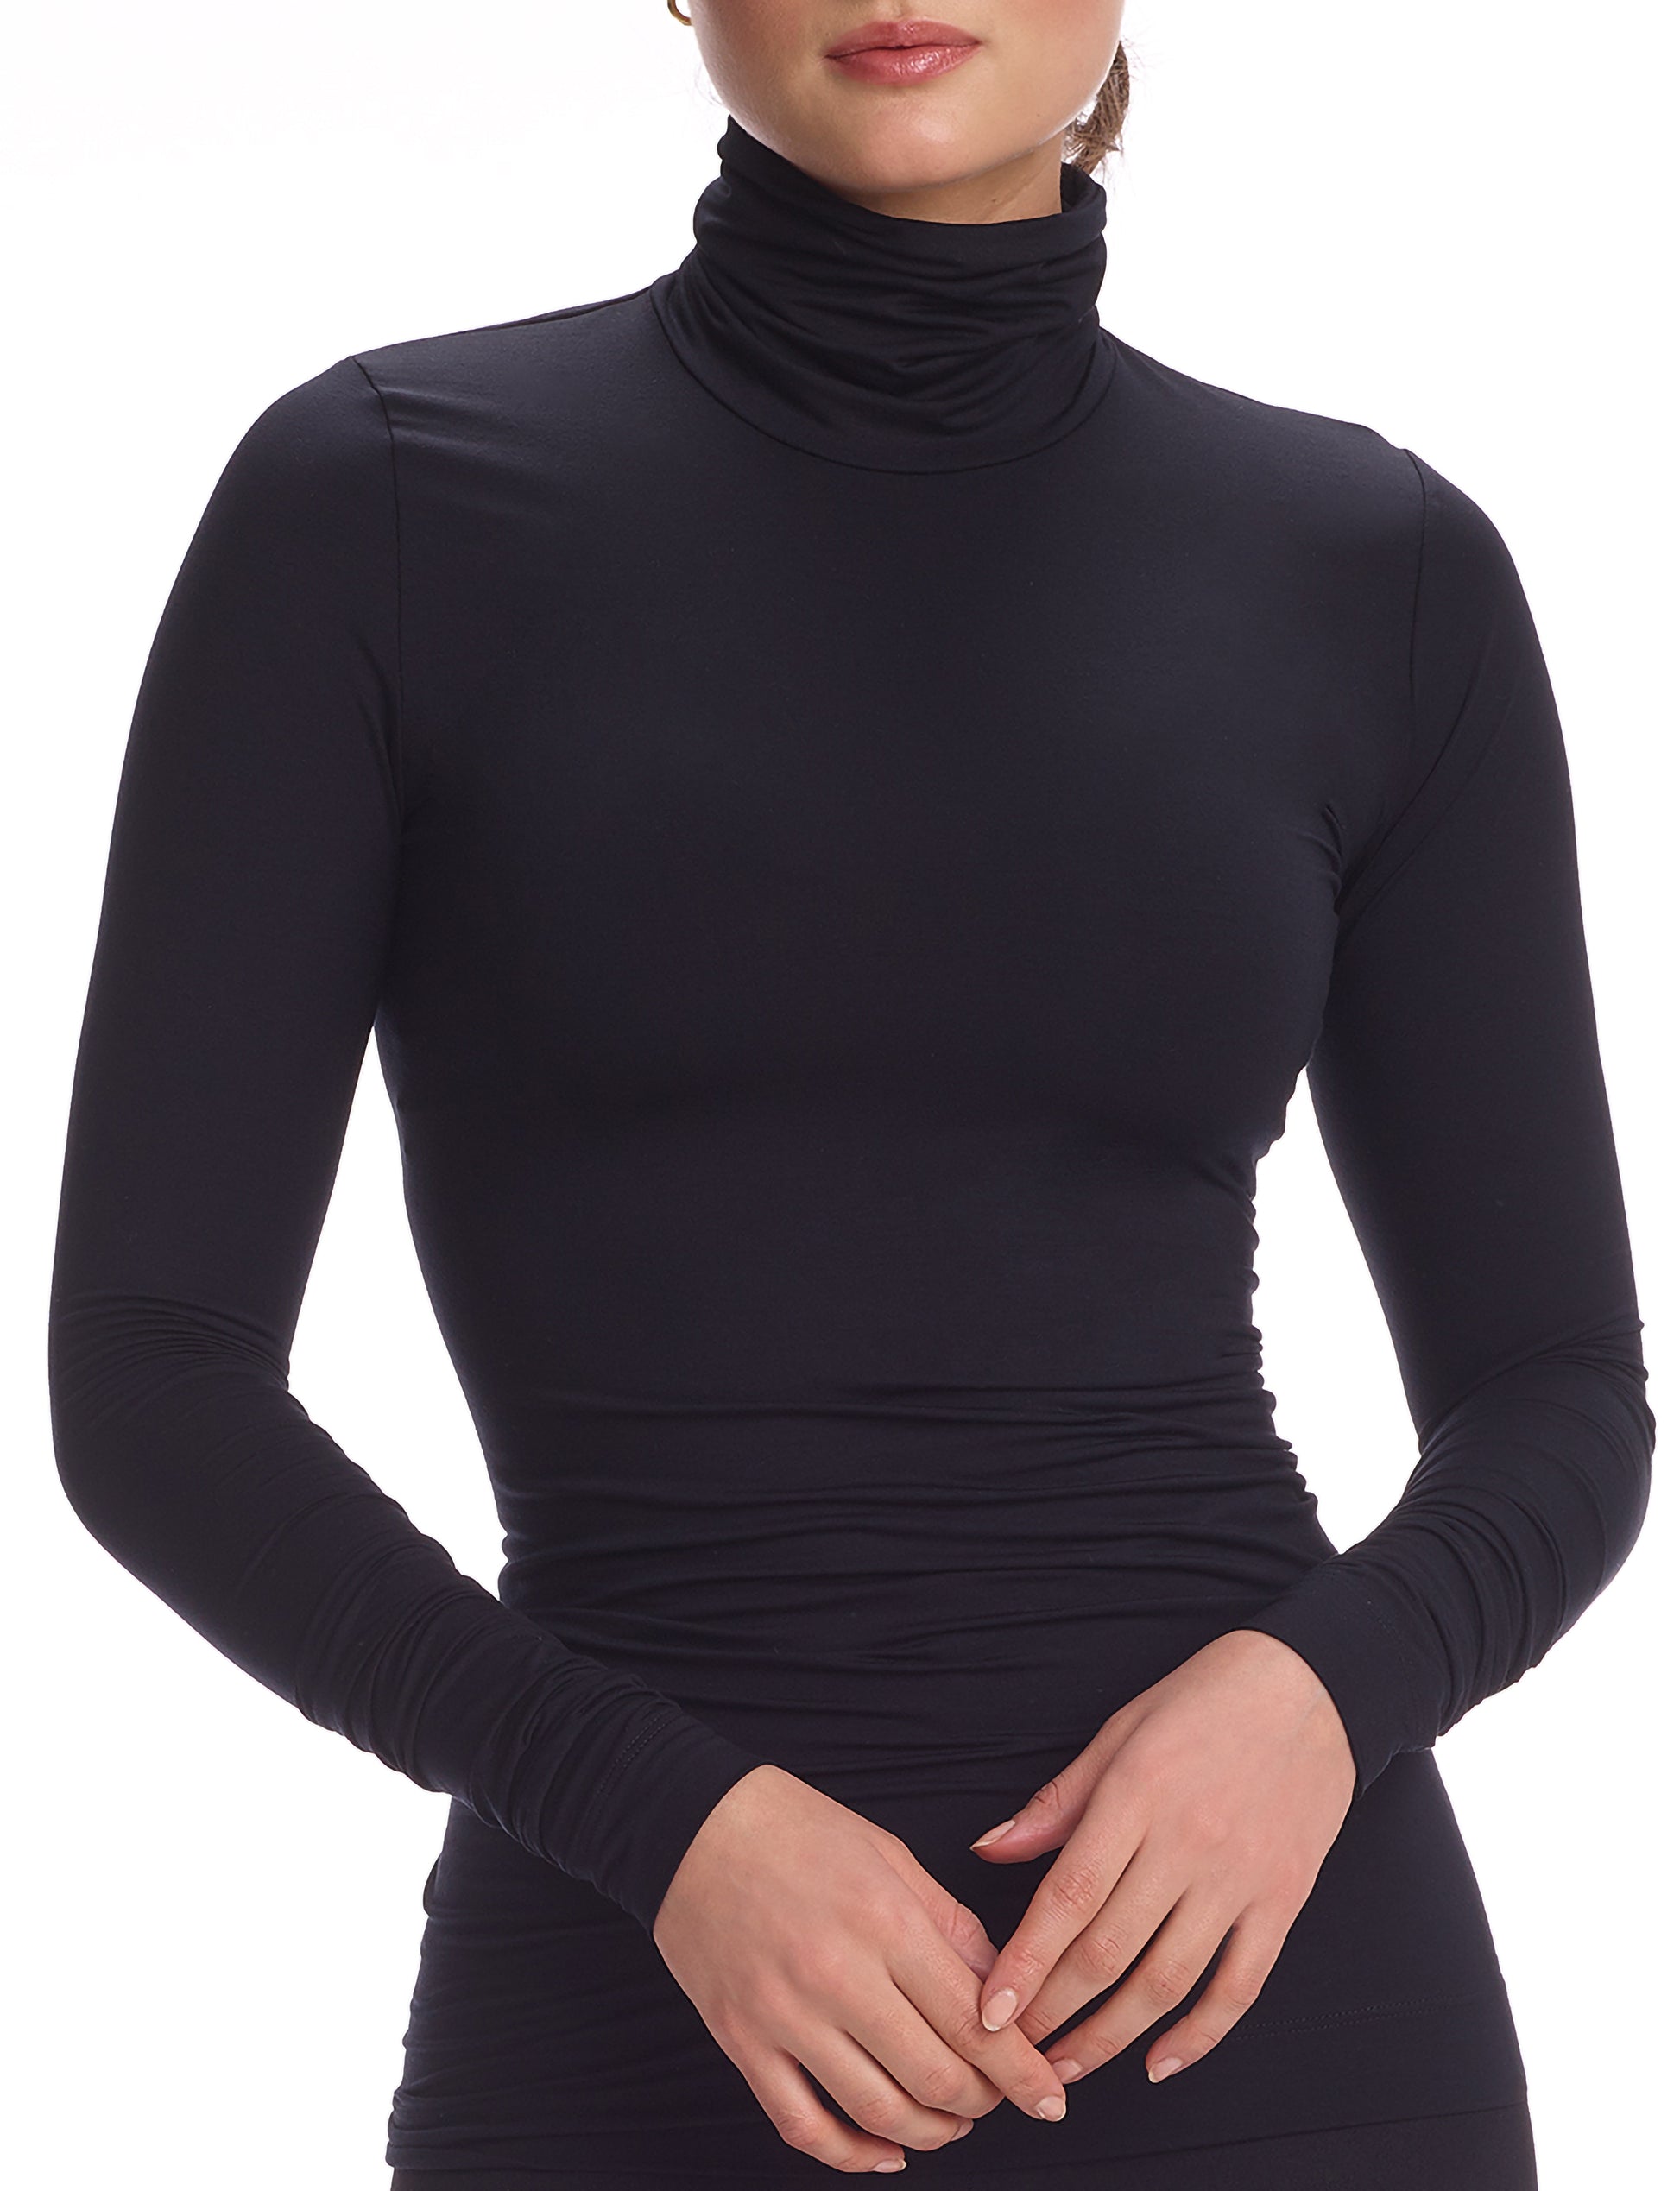 Commando Ballet Turtleneck Bodysuit - One Size / Black